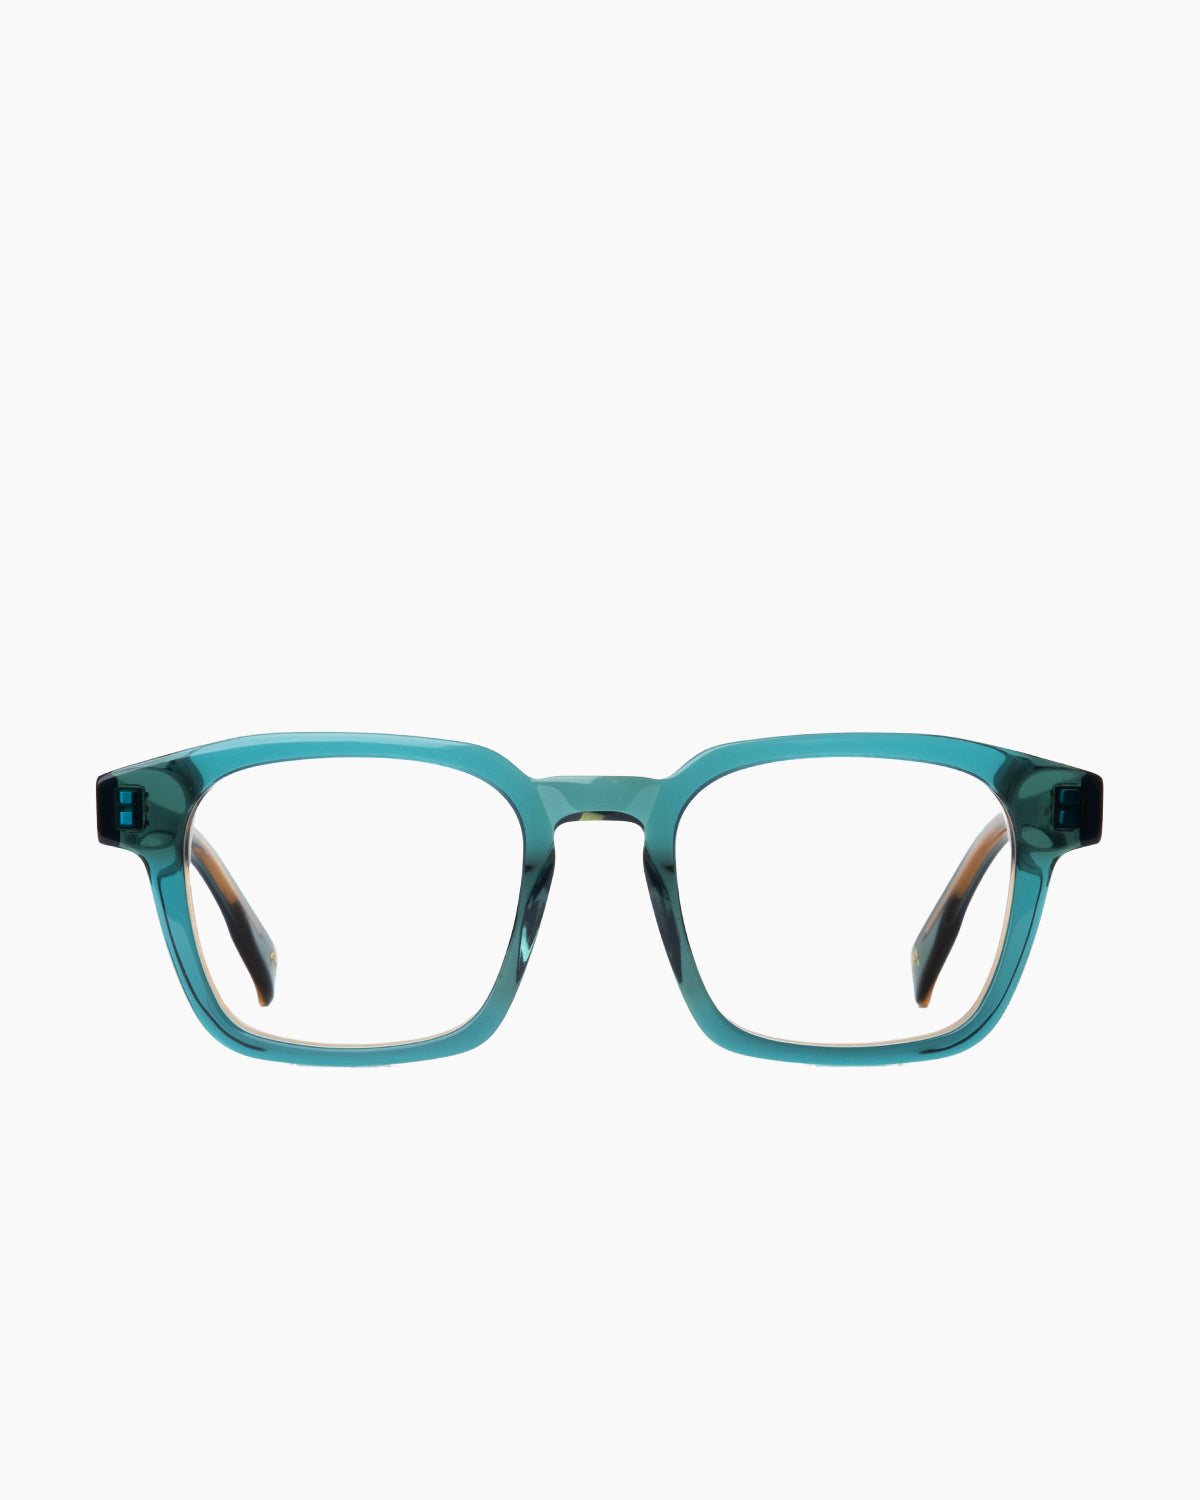 Spectacleeyeworks - Yolanta - c736 | Bar à lunettes:  Marie-Sophie Dion